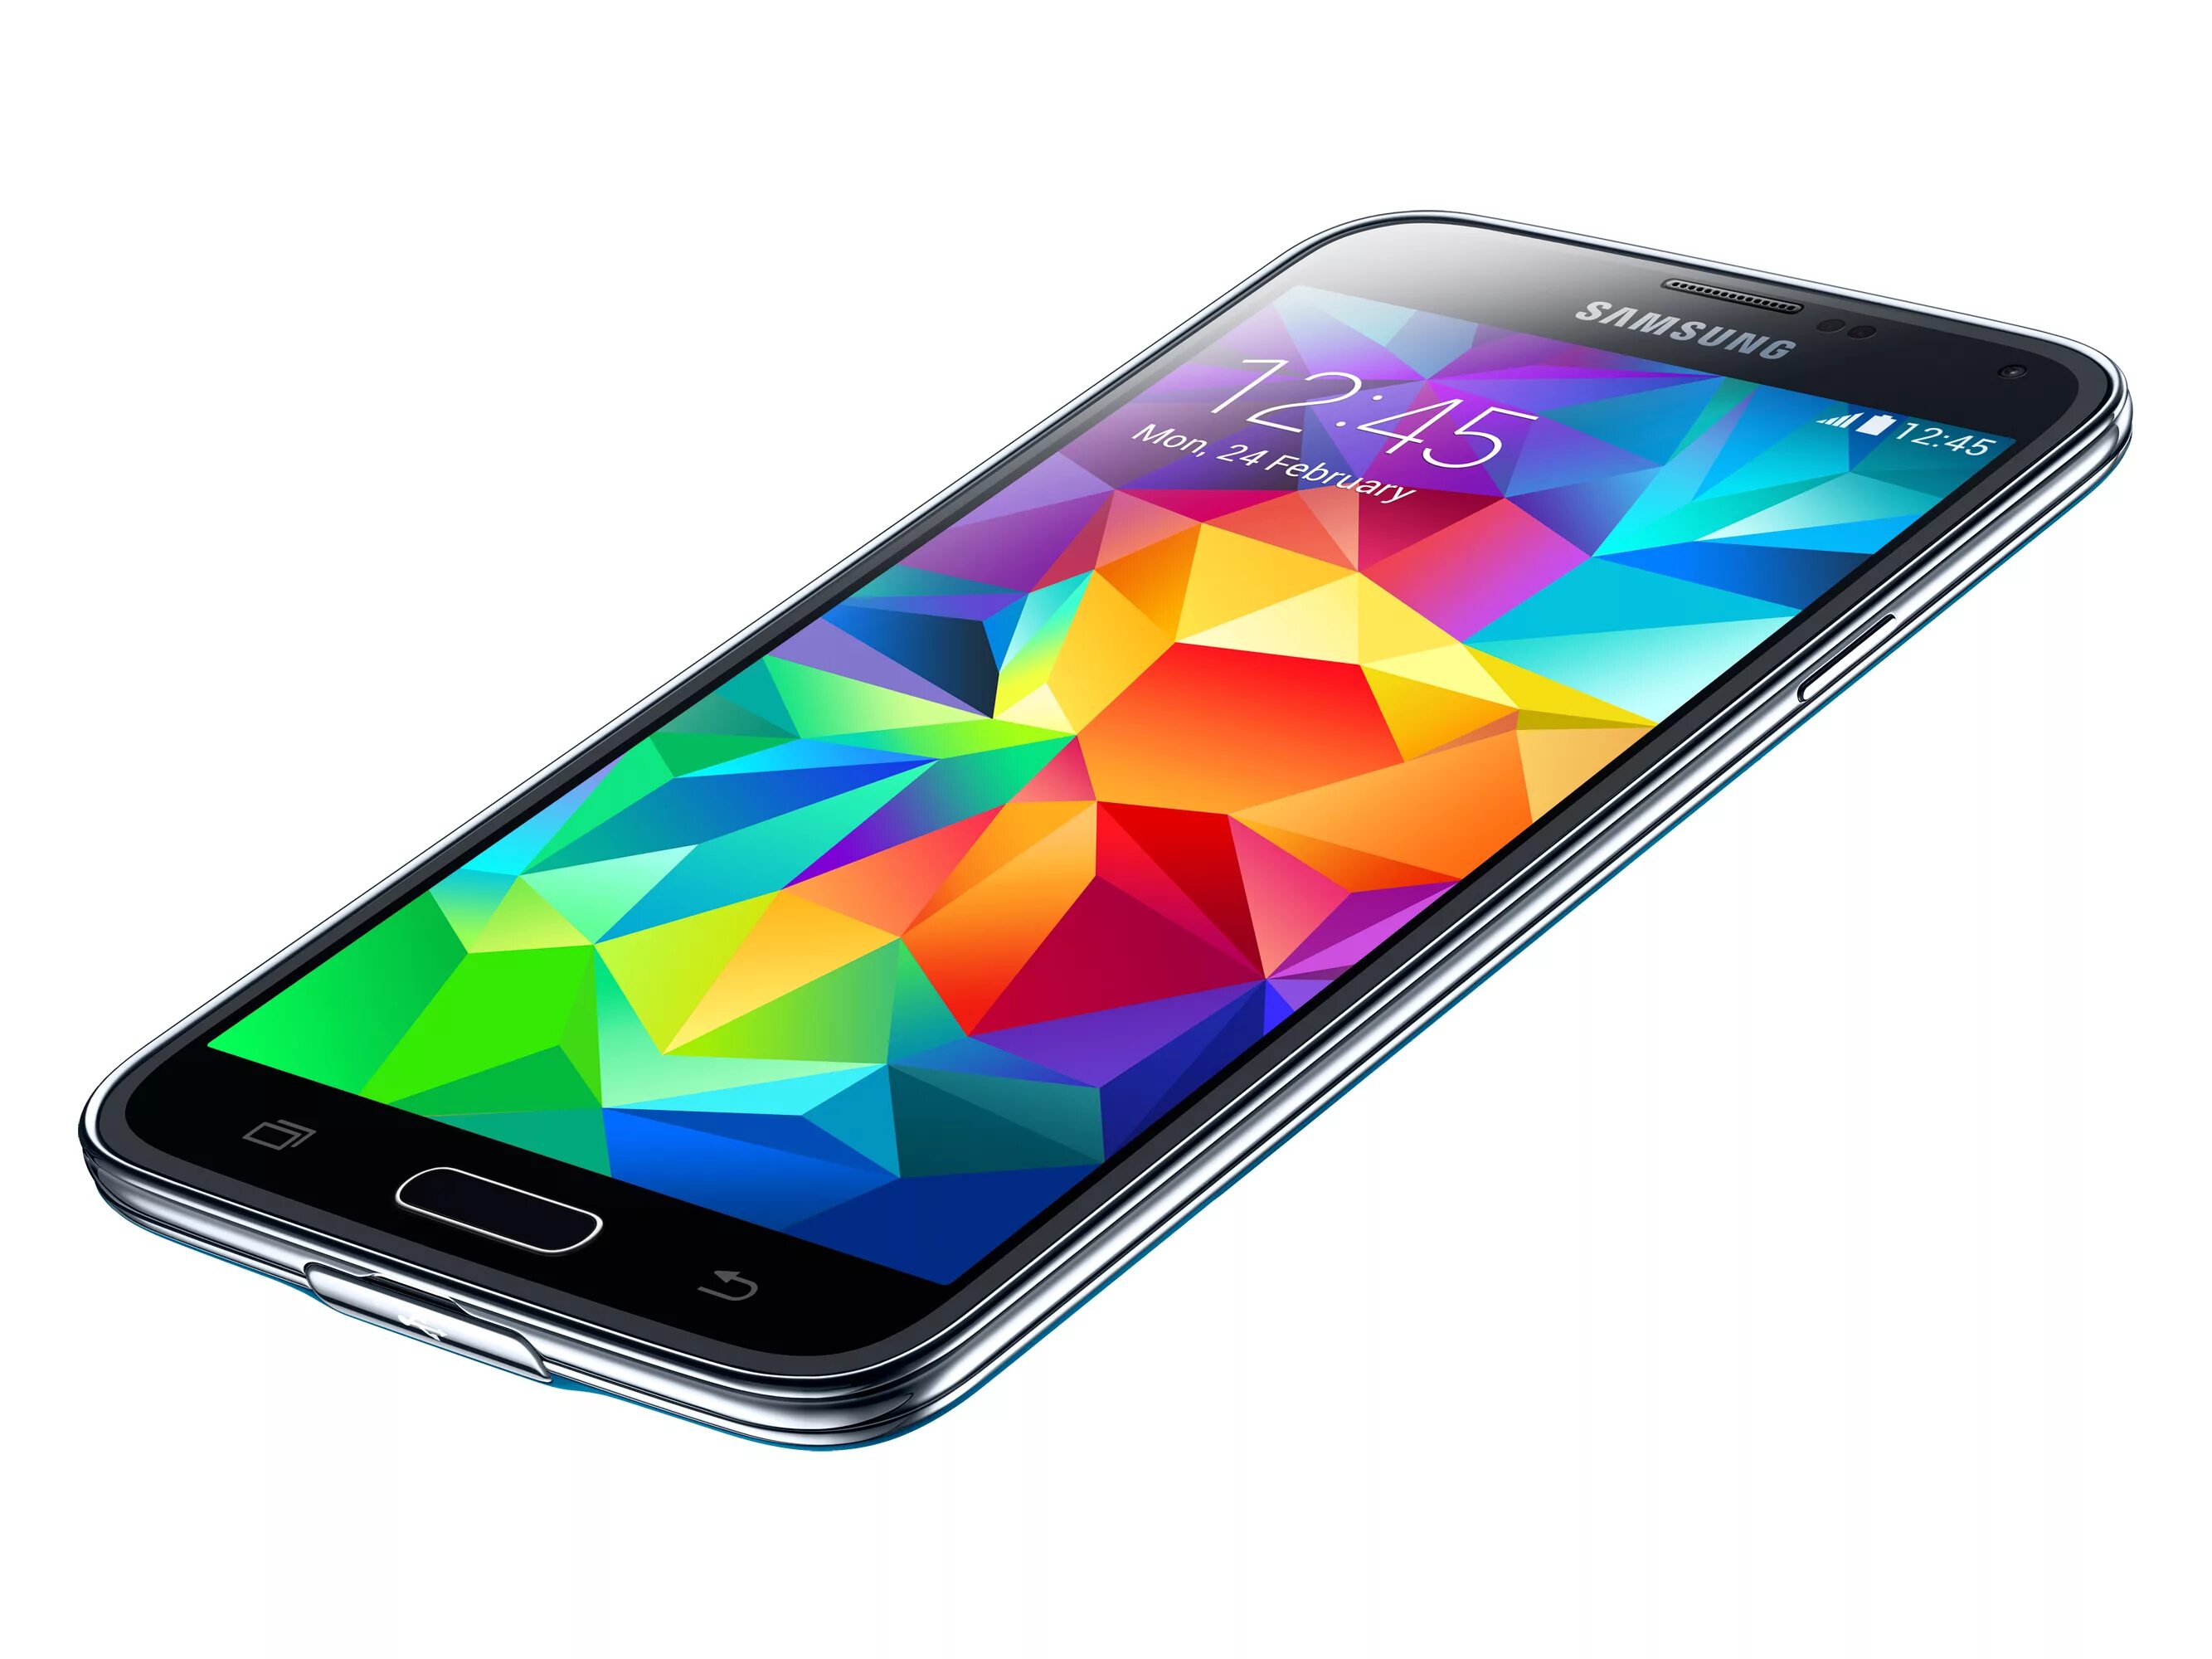 Купить дешевый samsung galaxy. Samsung SM-g900f. Самсунг SM g900f. Смартфон Samsung Galaxy s5 SM-g900f 16gb. Samsung Galaxy s5 SM-g870a.